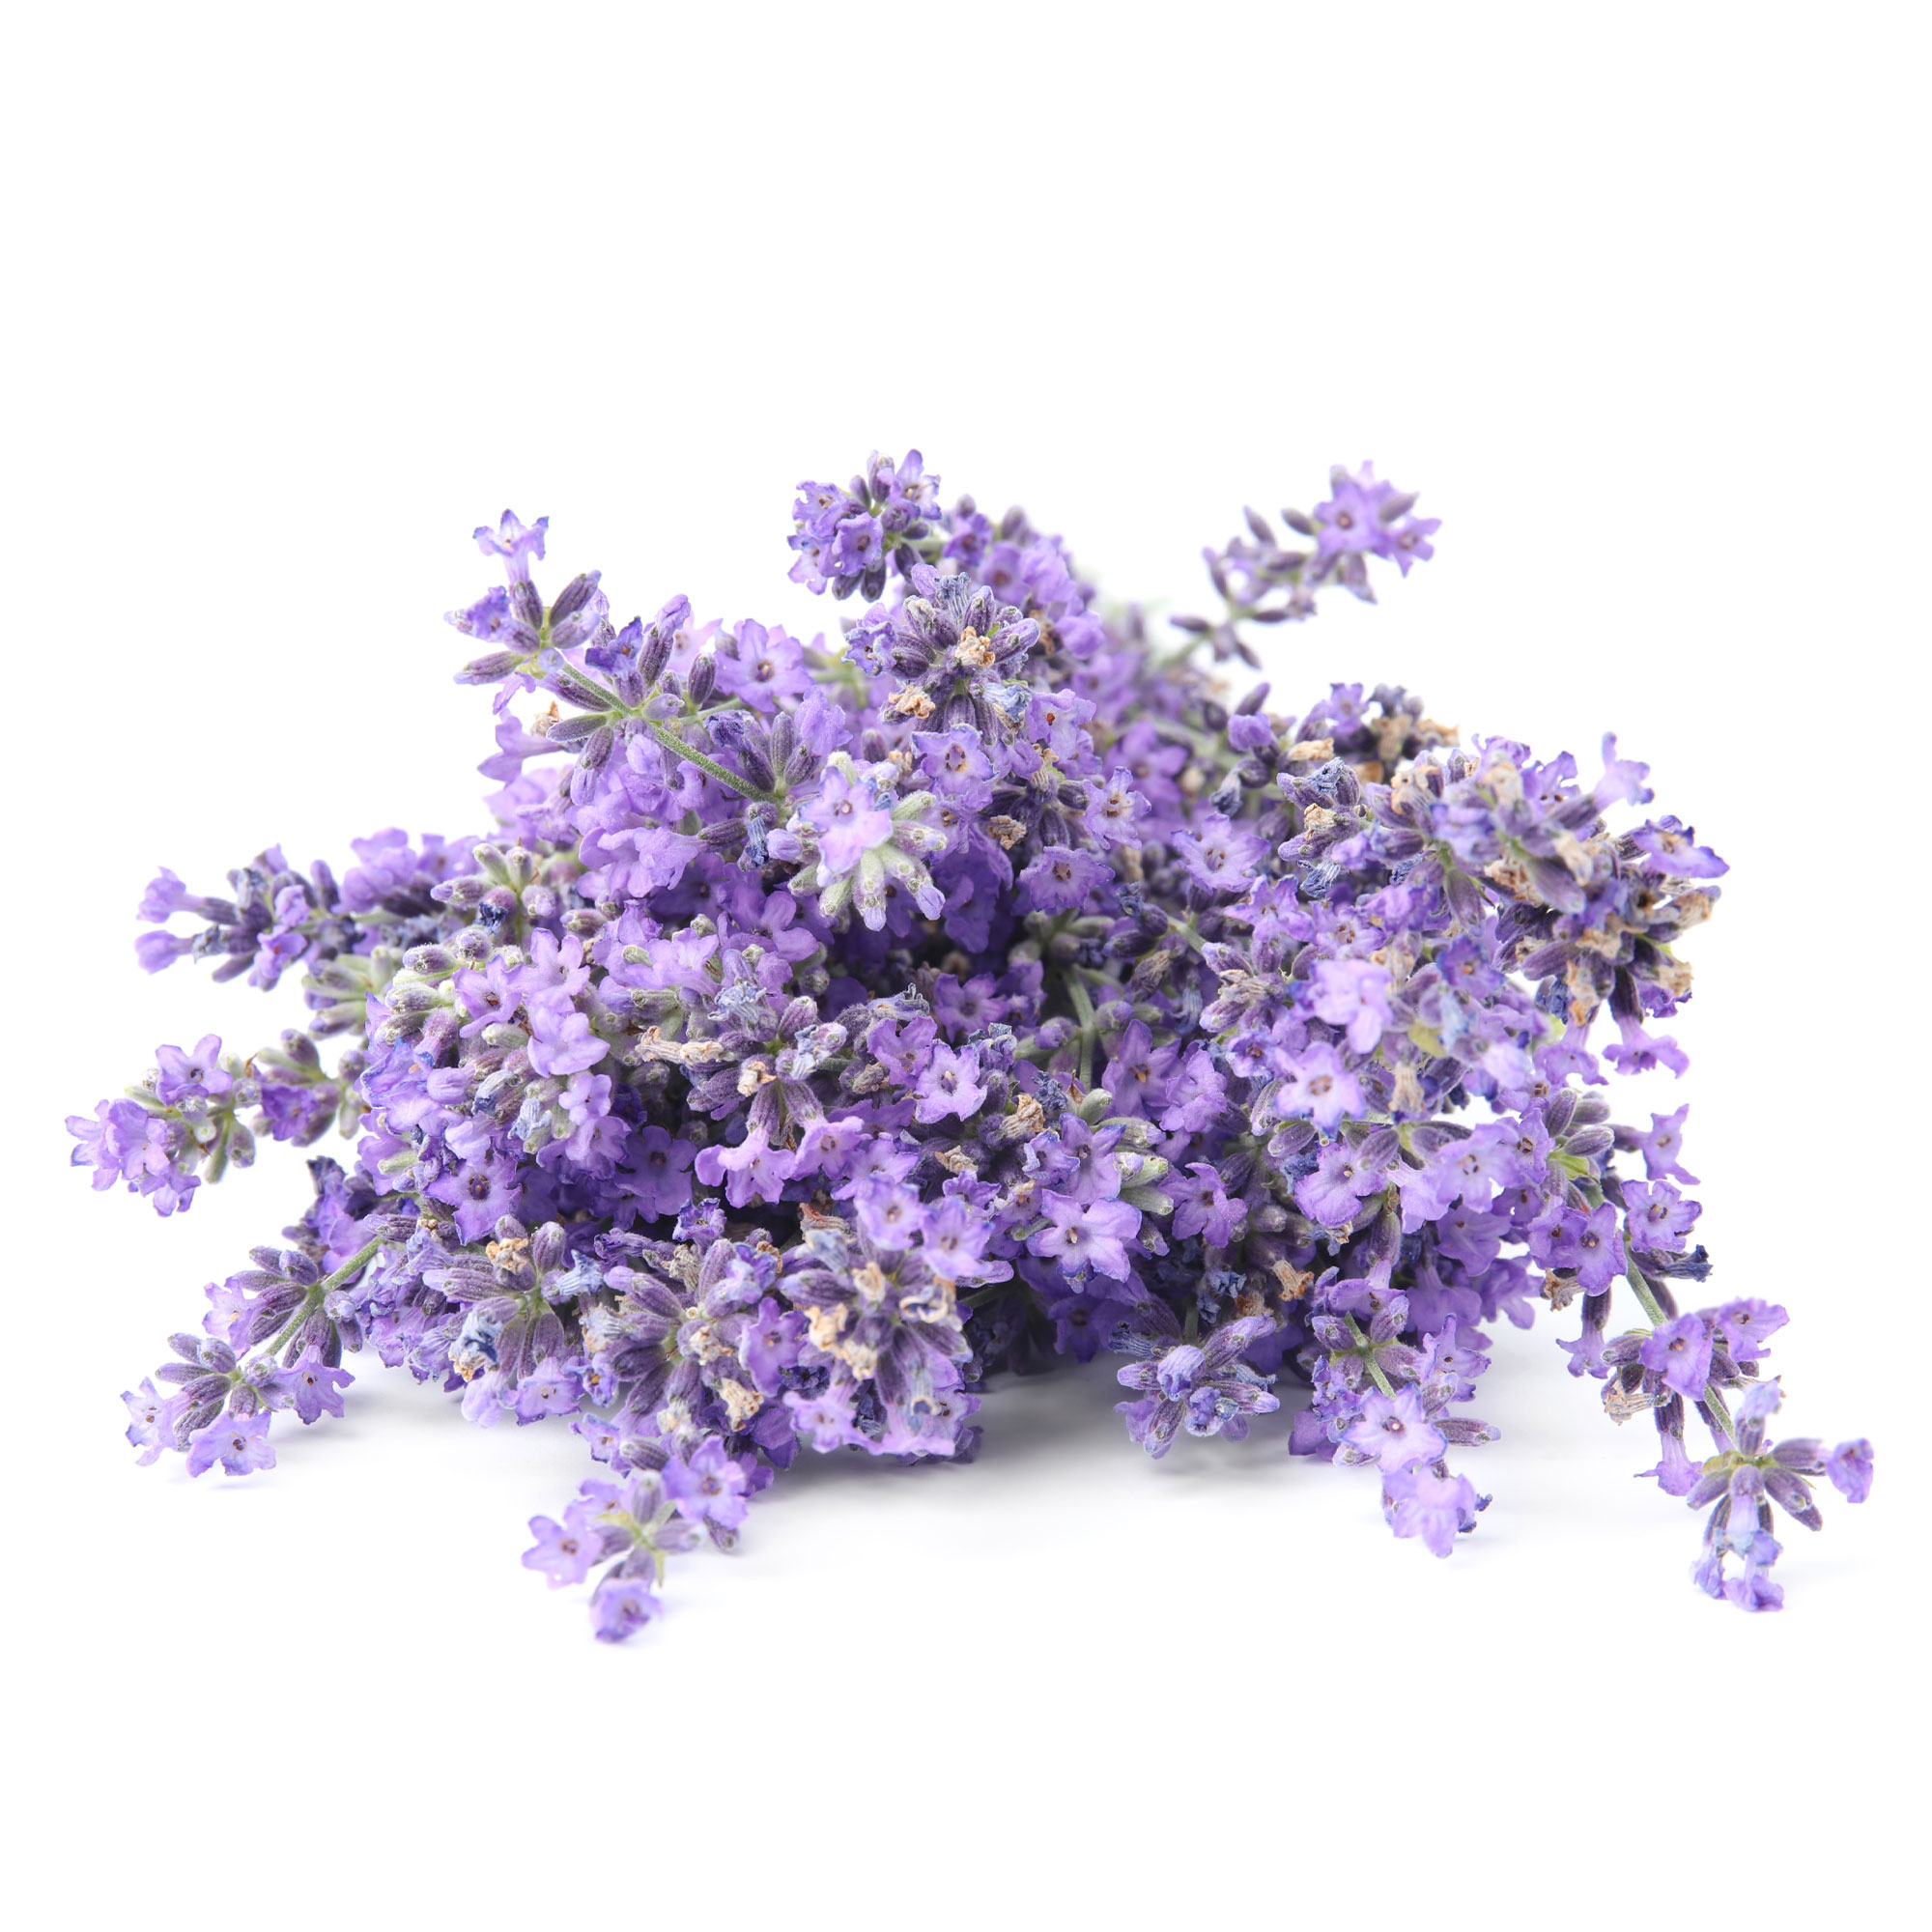 Lavender Scent Ingredients